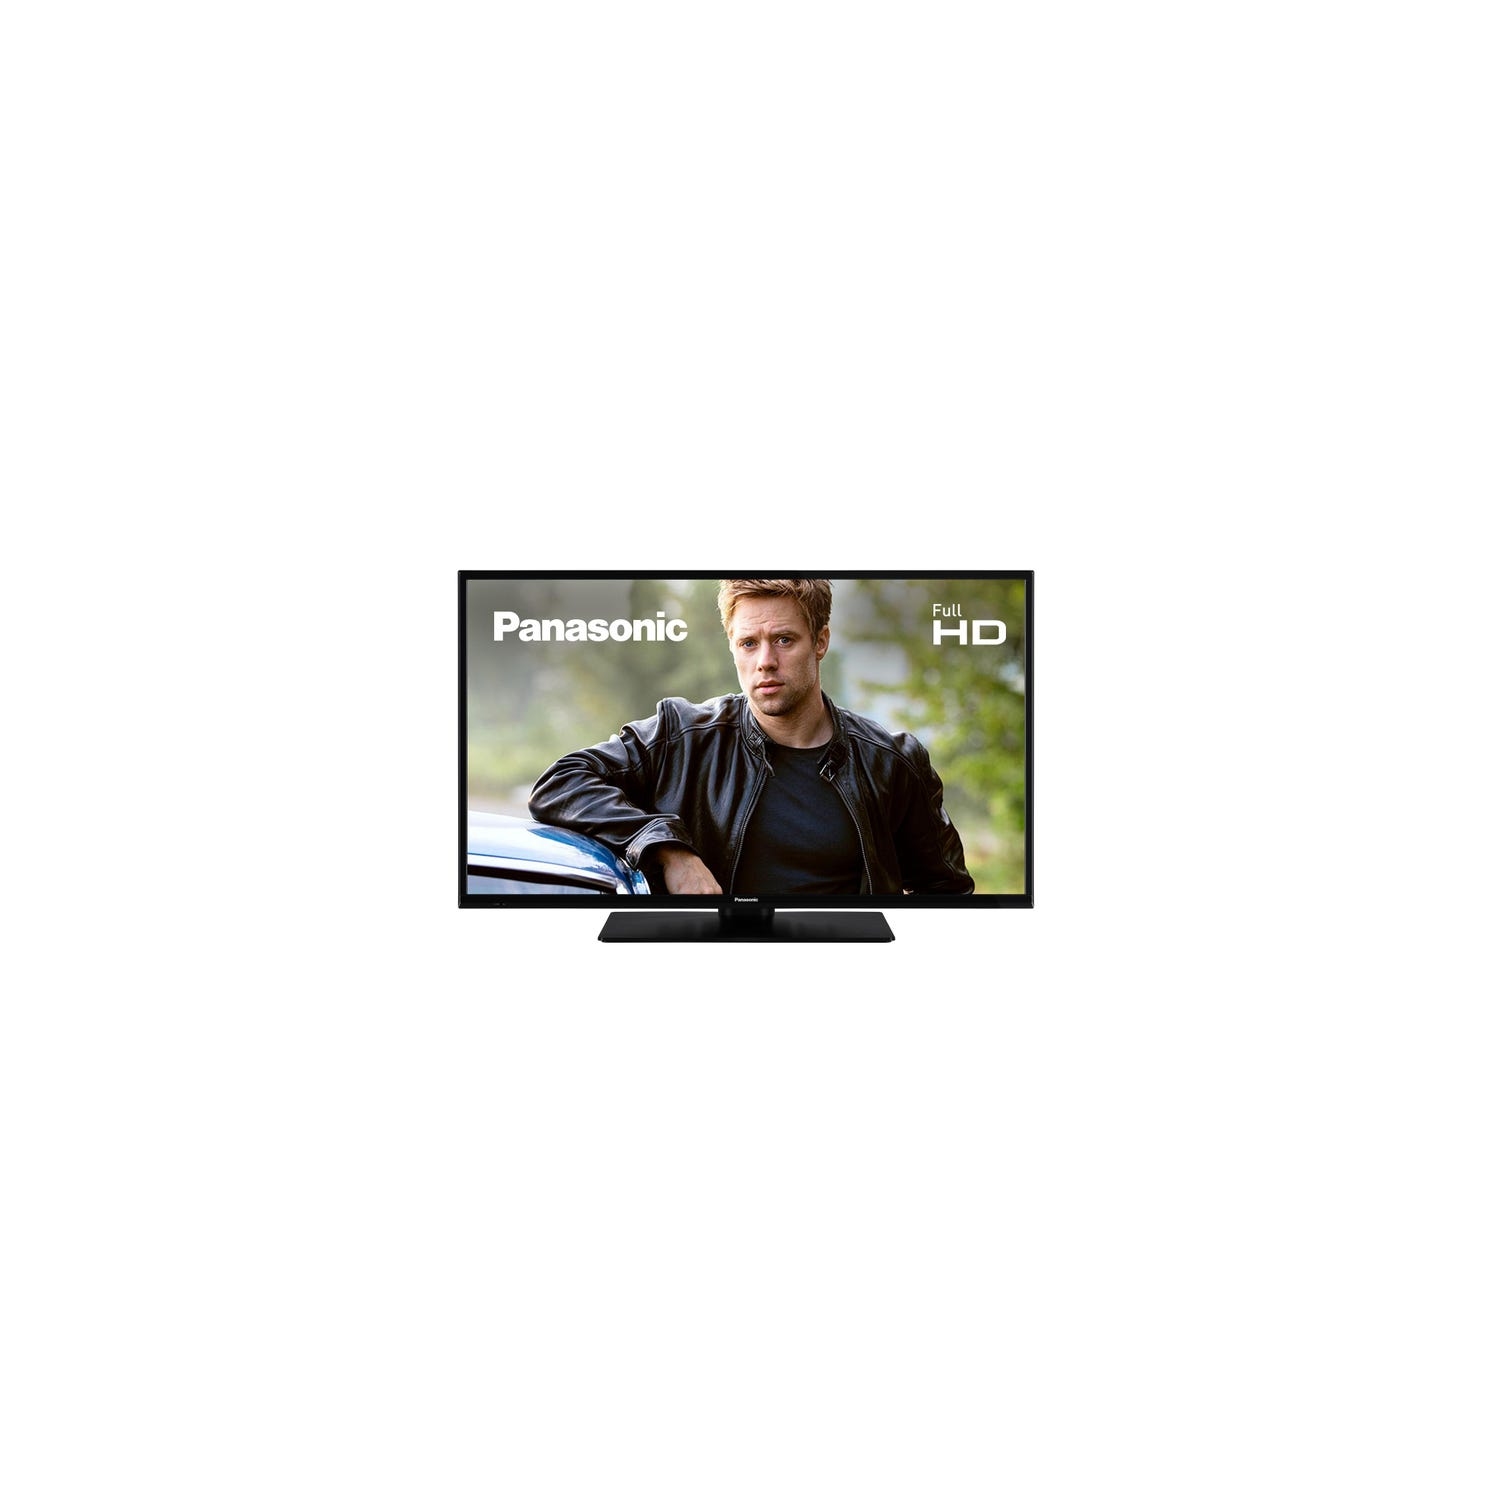 Panasonic 43" Full HD LED TV with Freeview HD - TX-43G301B  NEW 2020 - 0